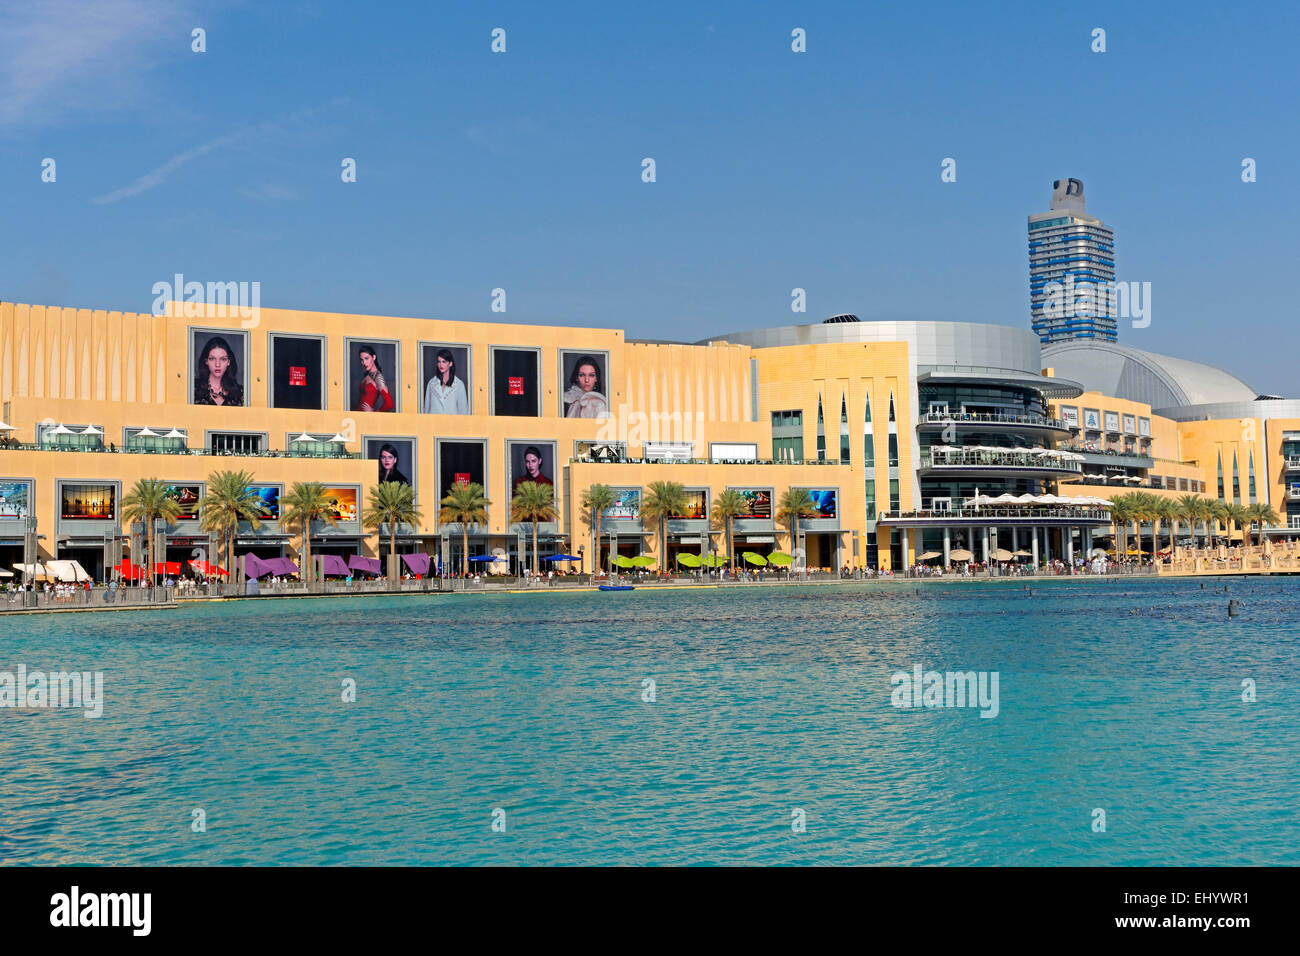 Asia, United Arab Emirates, UAE, Dubai, Sheikh Mohammed Bin Rashid boulevard, Dubai Mall, Burj Khalifa lake, architecture, buildi Stock Photo